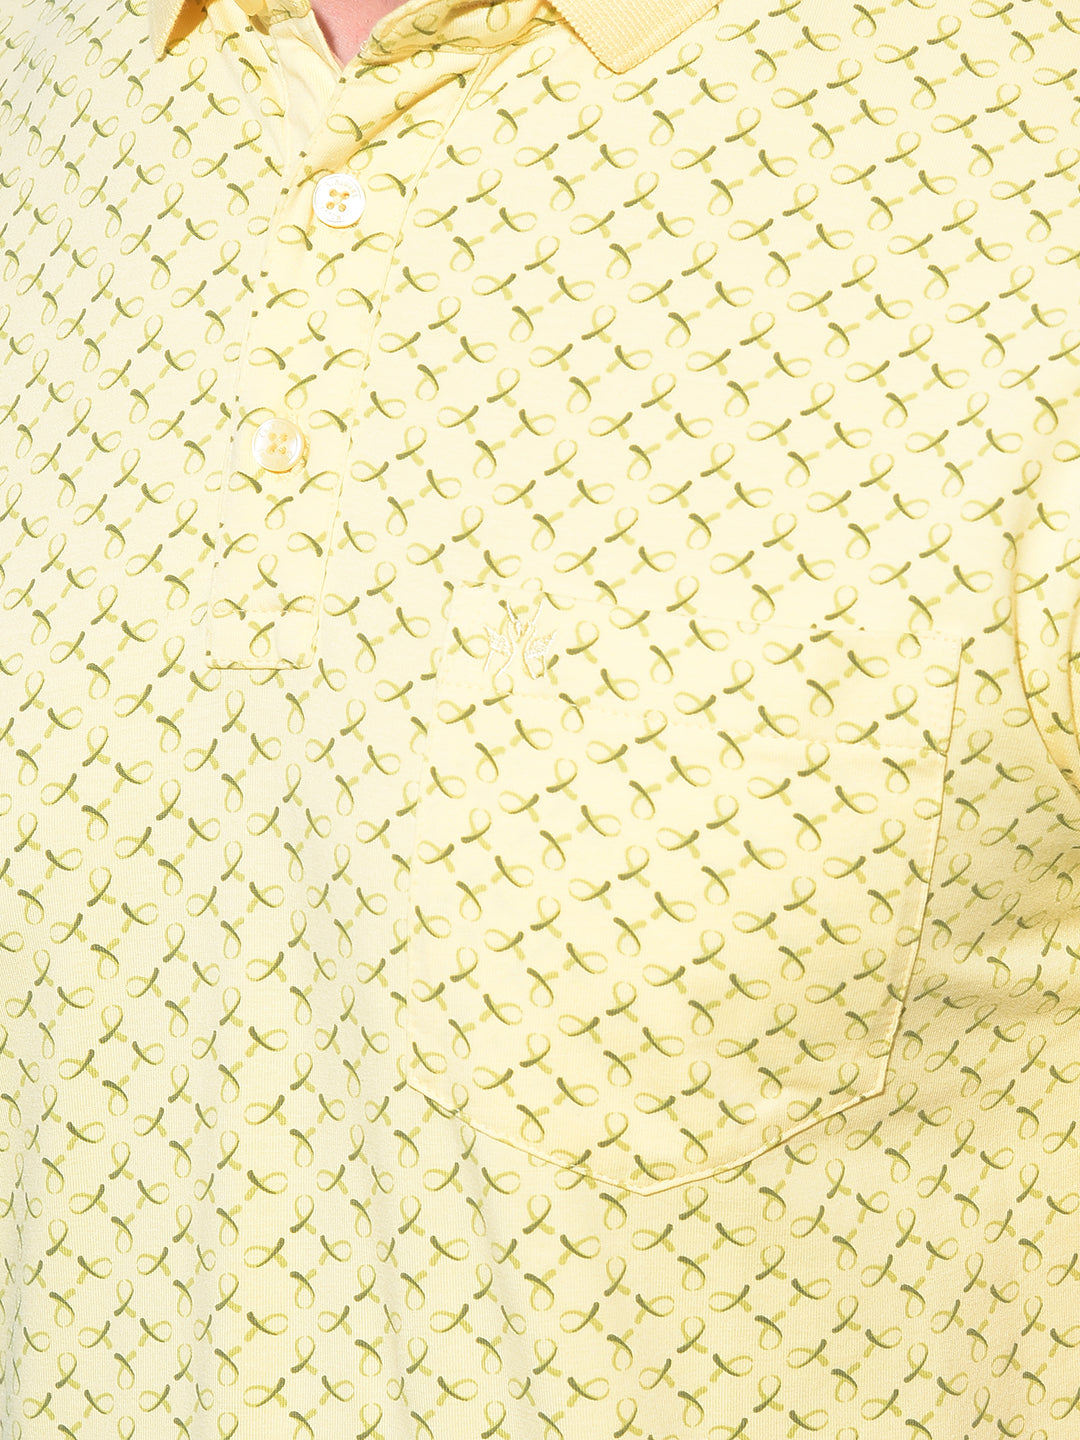 Yellow Printed Polo T-Shirt-Men T-Shirts-Crimsoune Club